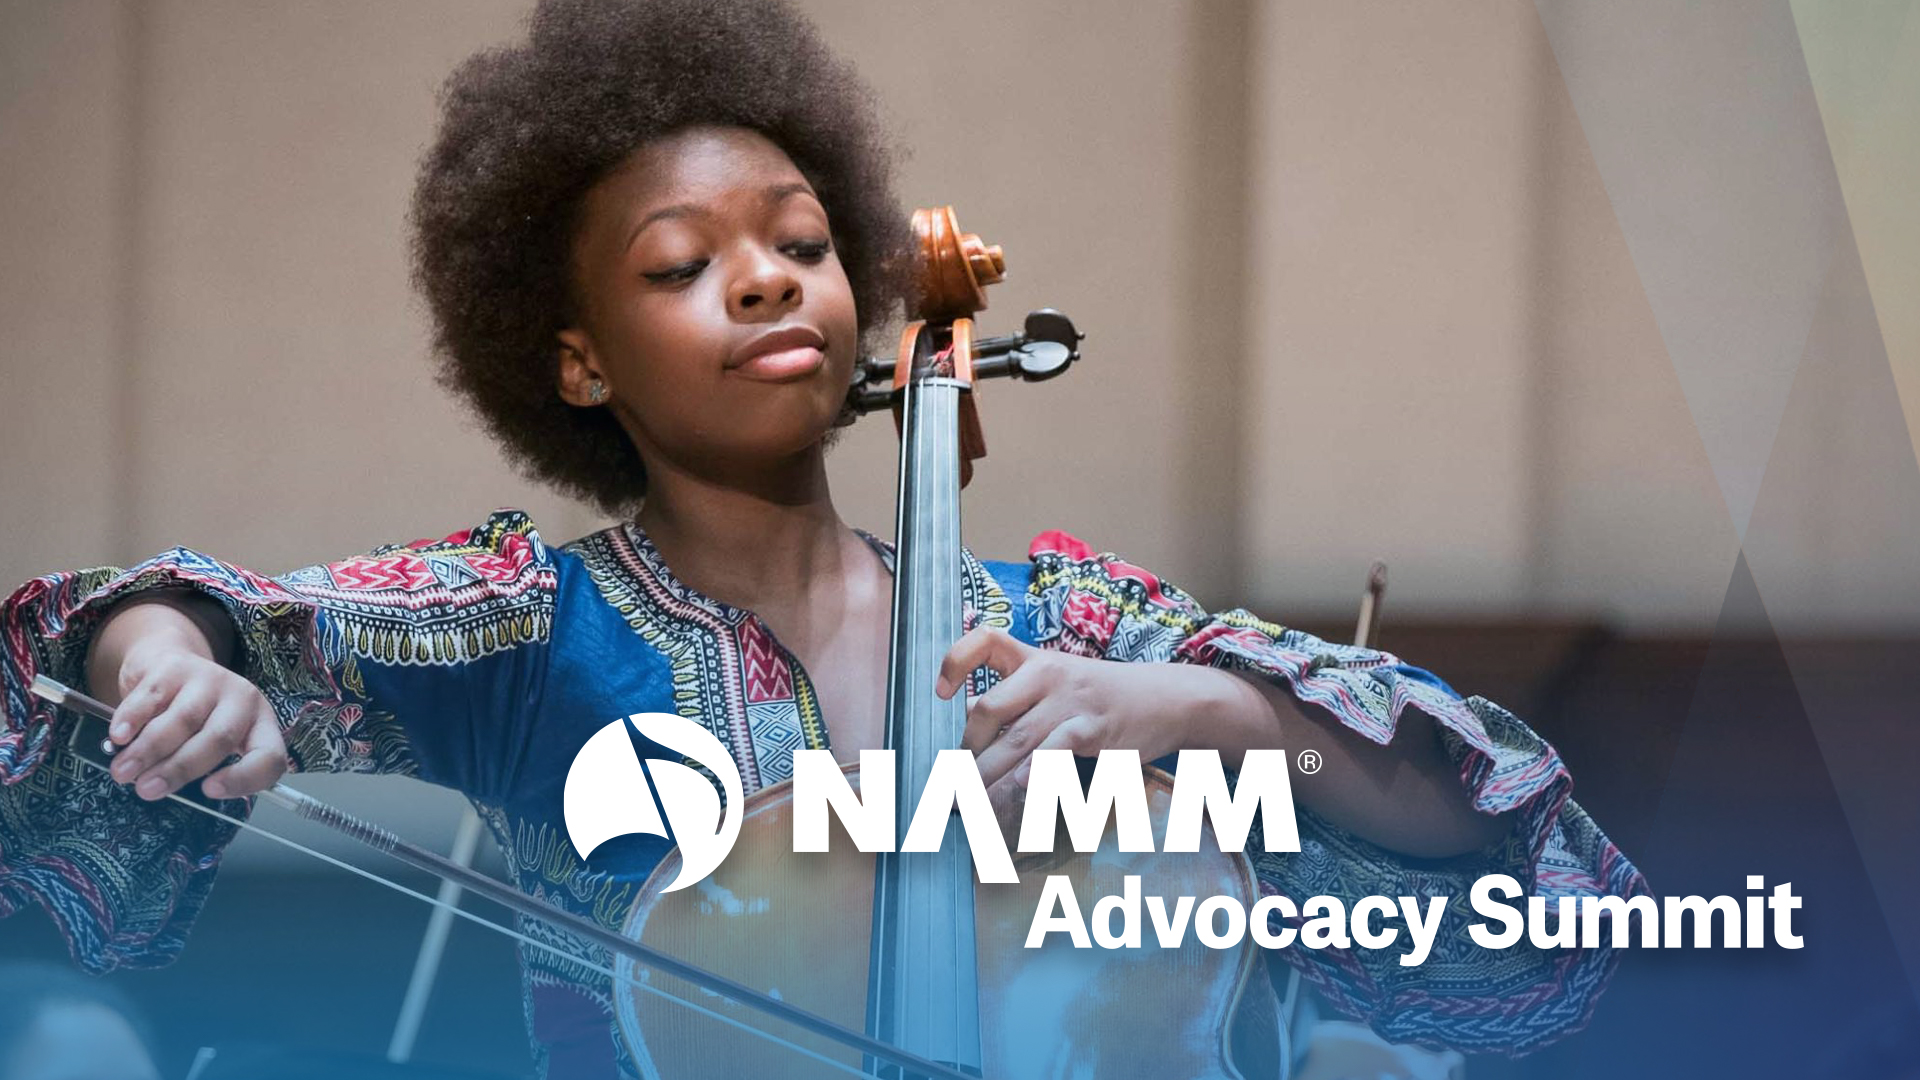 NAMM Advocacy Summit